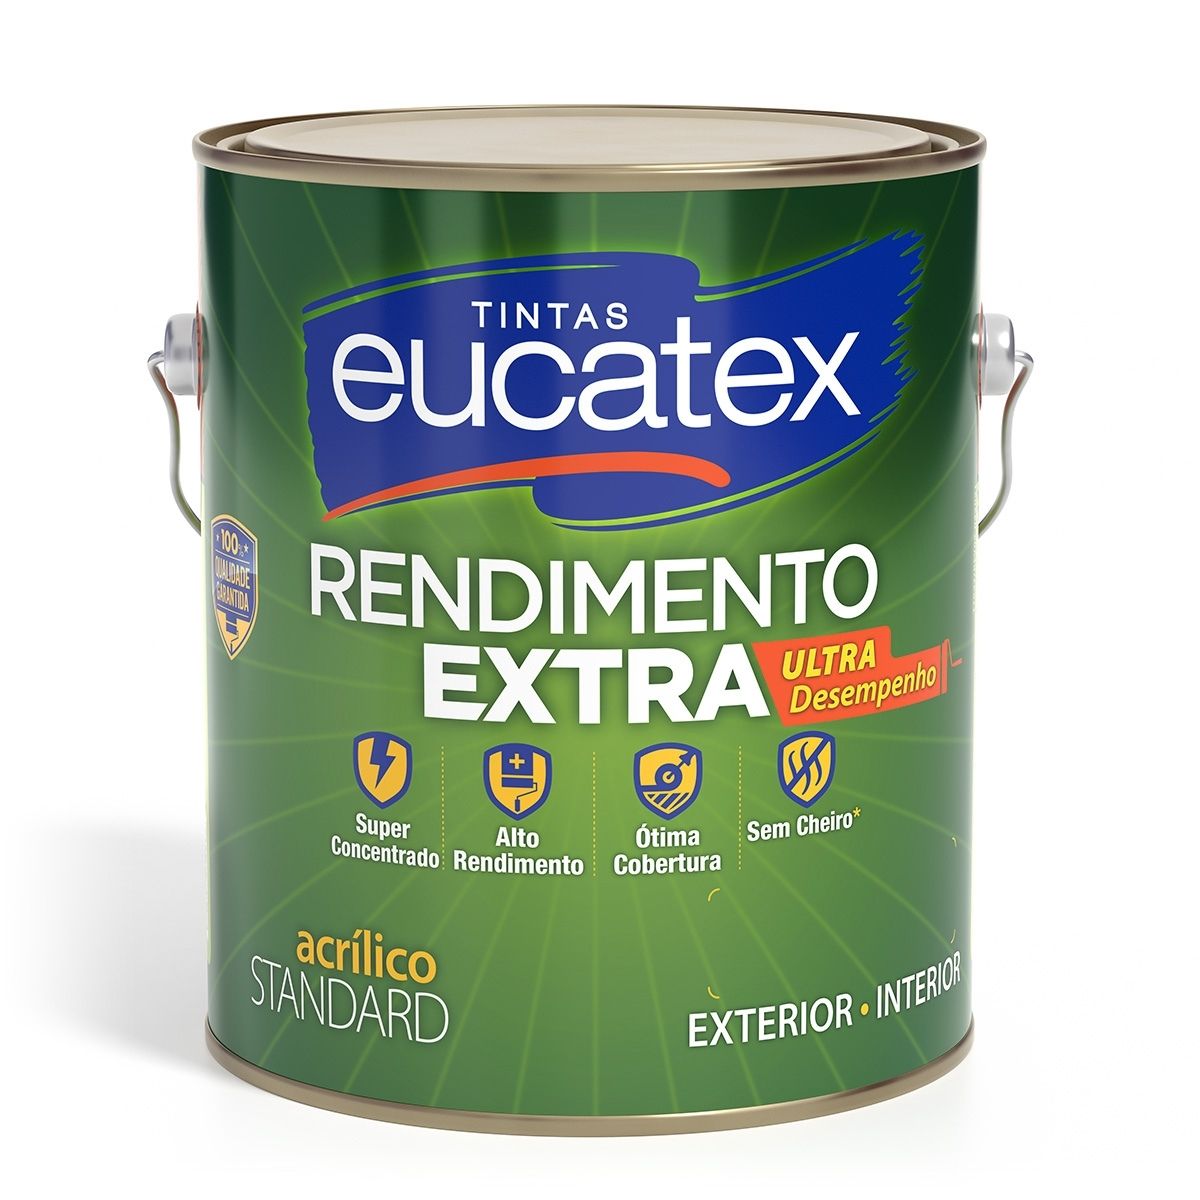 Eucatex Rendimento Extra 3,6L*